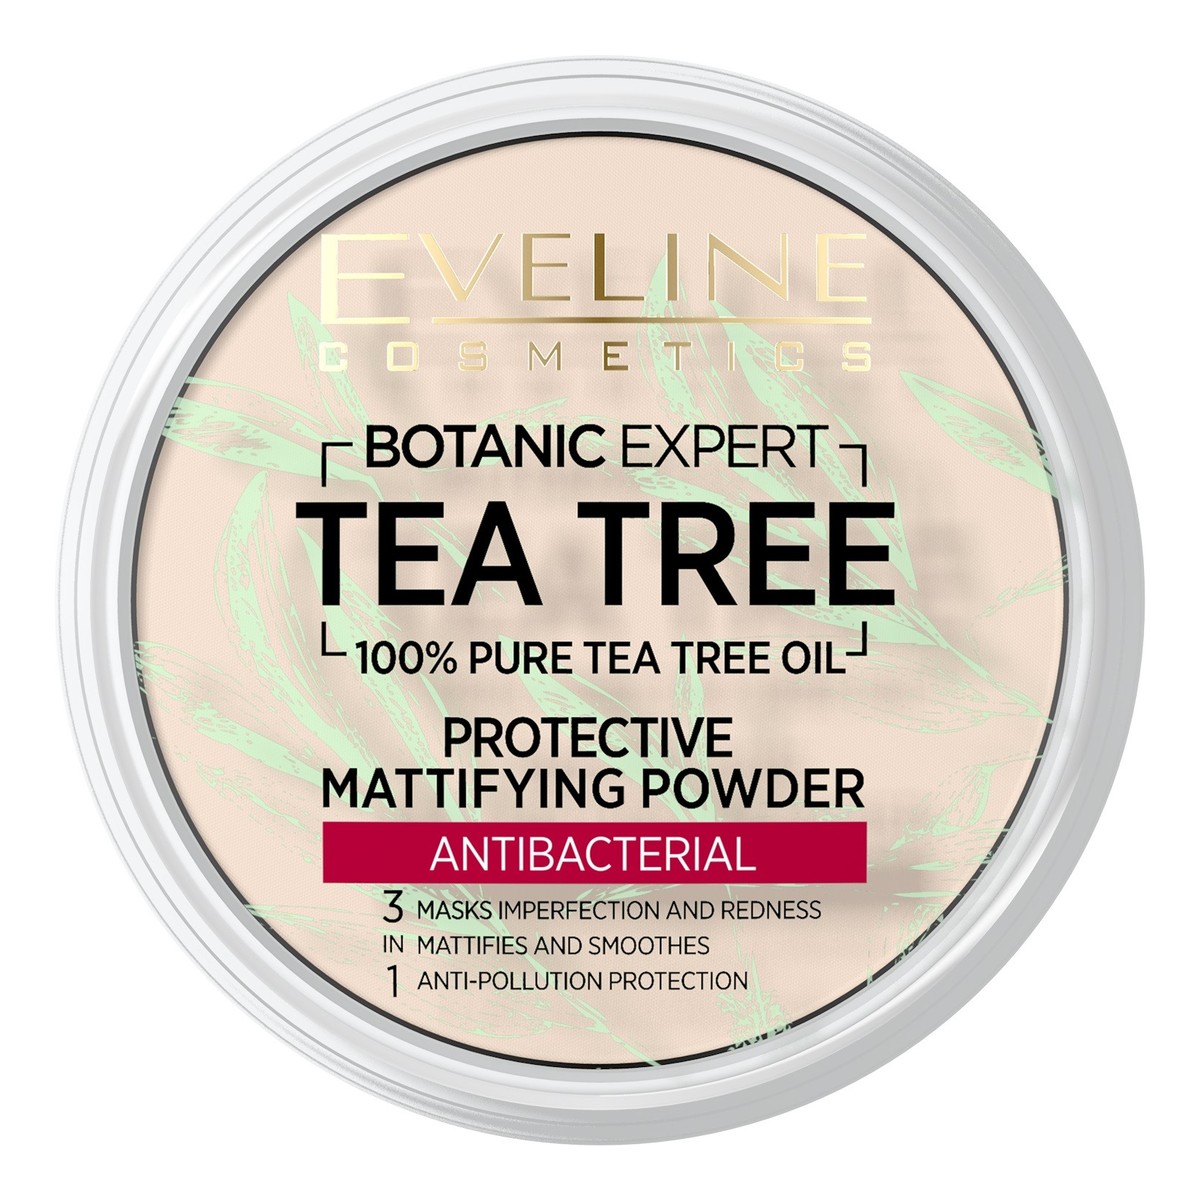 Eveline Botanic Expert Tea Tree Antybakteryjny puder matujący i ochronny 12g